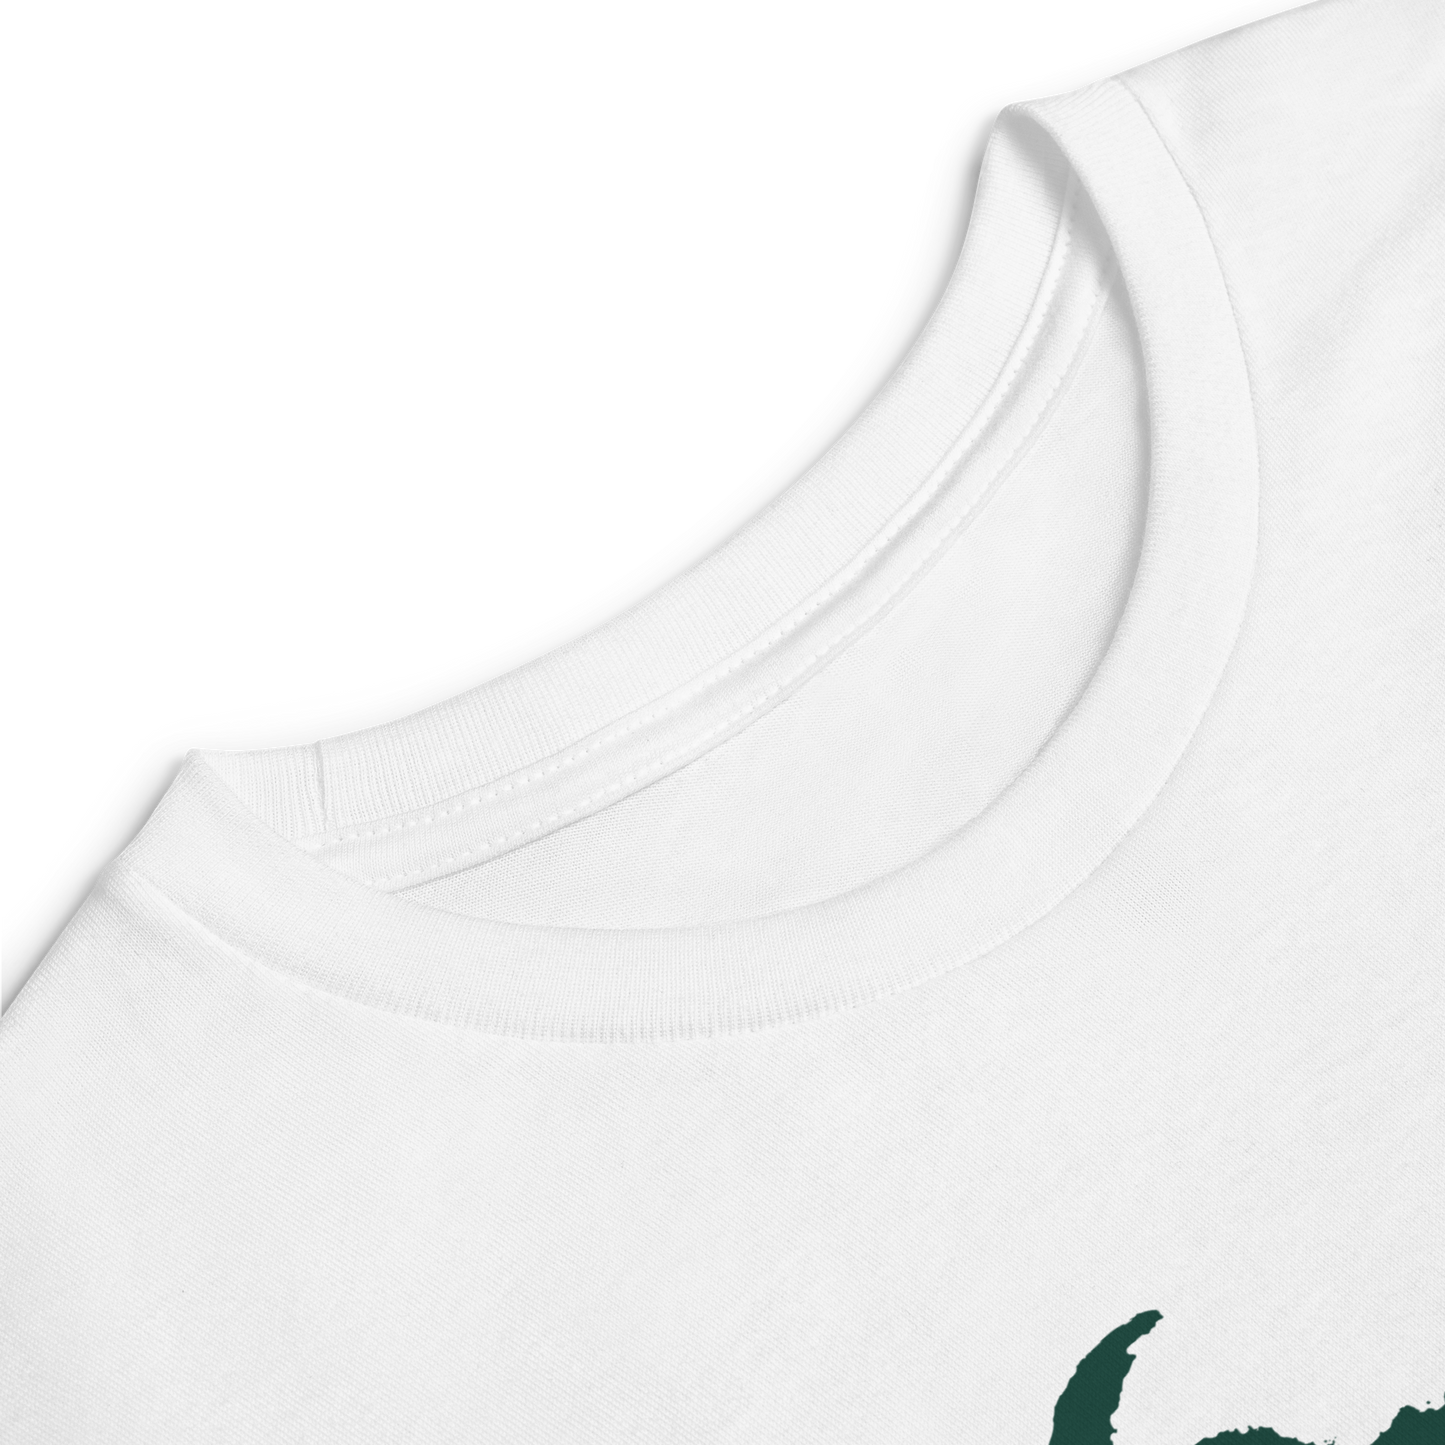 Michigan Upper Peninsula T-Shirt (w/ Green UP Outline) | Youth Long Sleeve